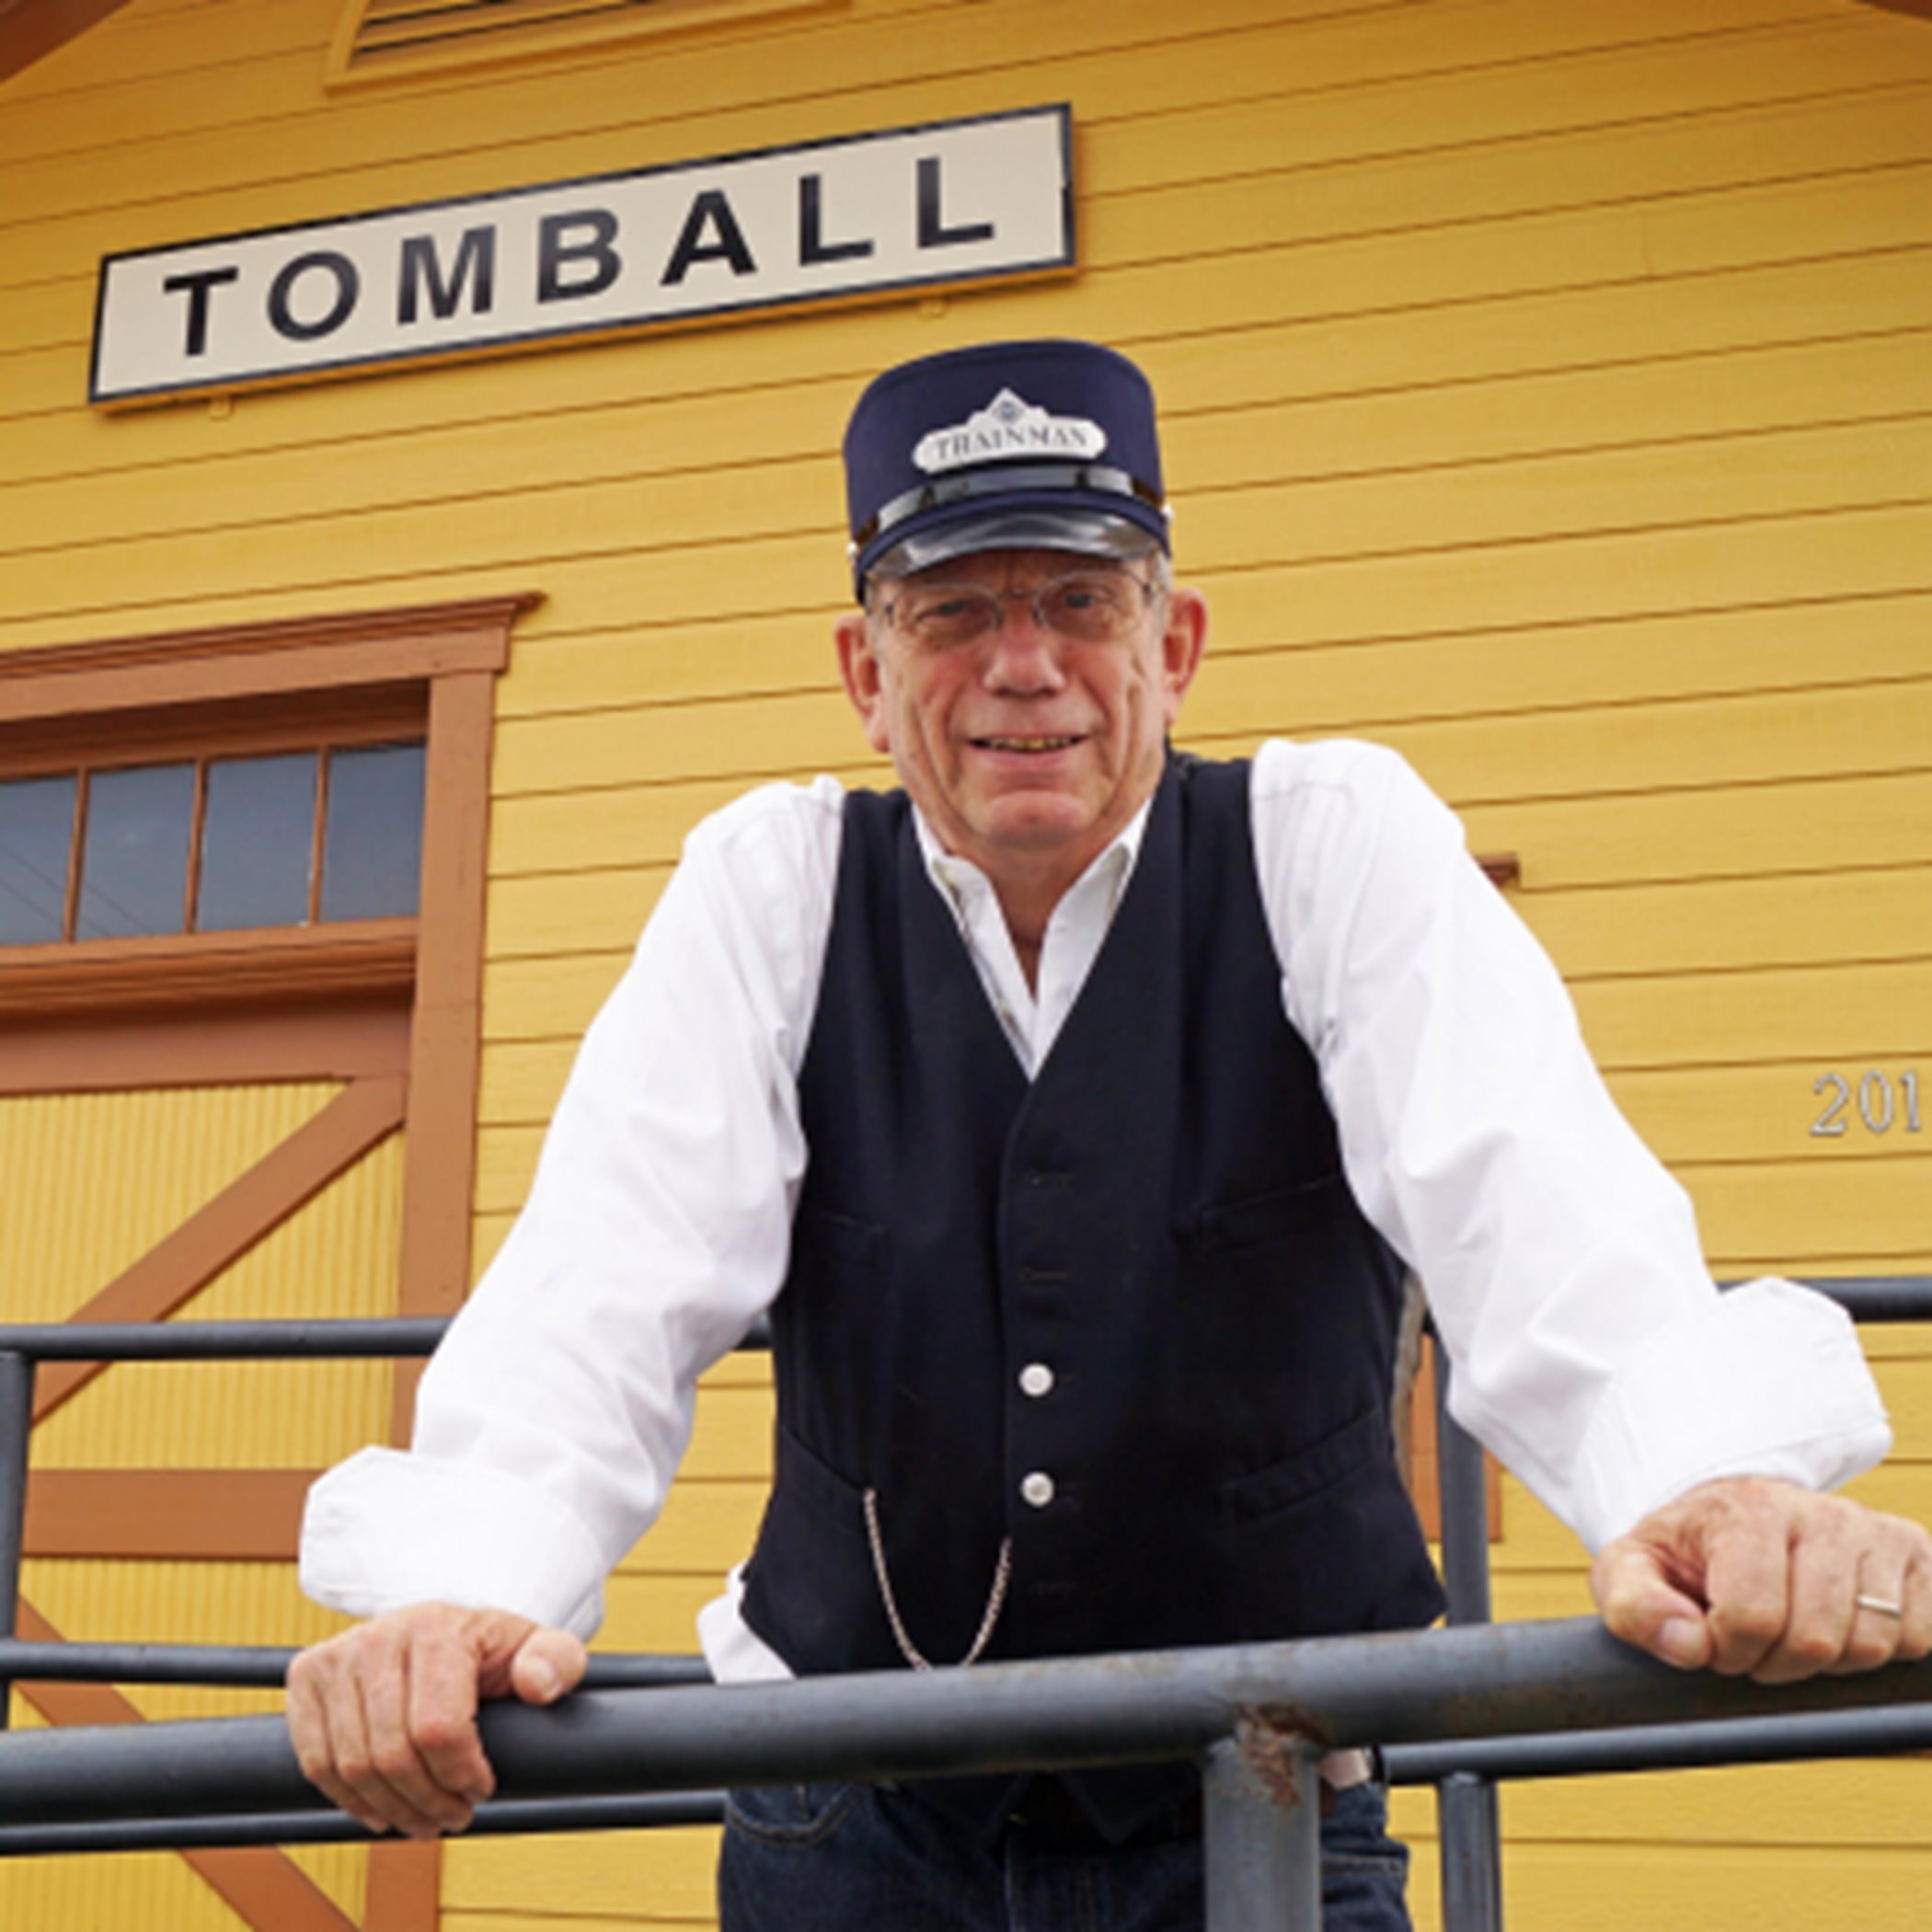 Train Conductor at Tomball Railroad Depot Plaza